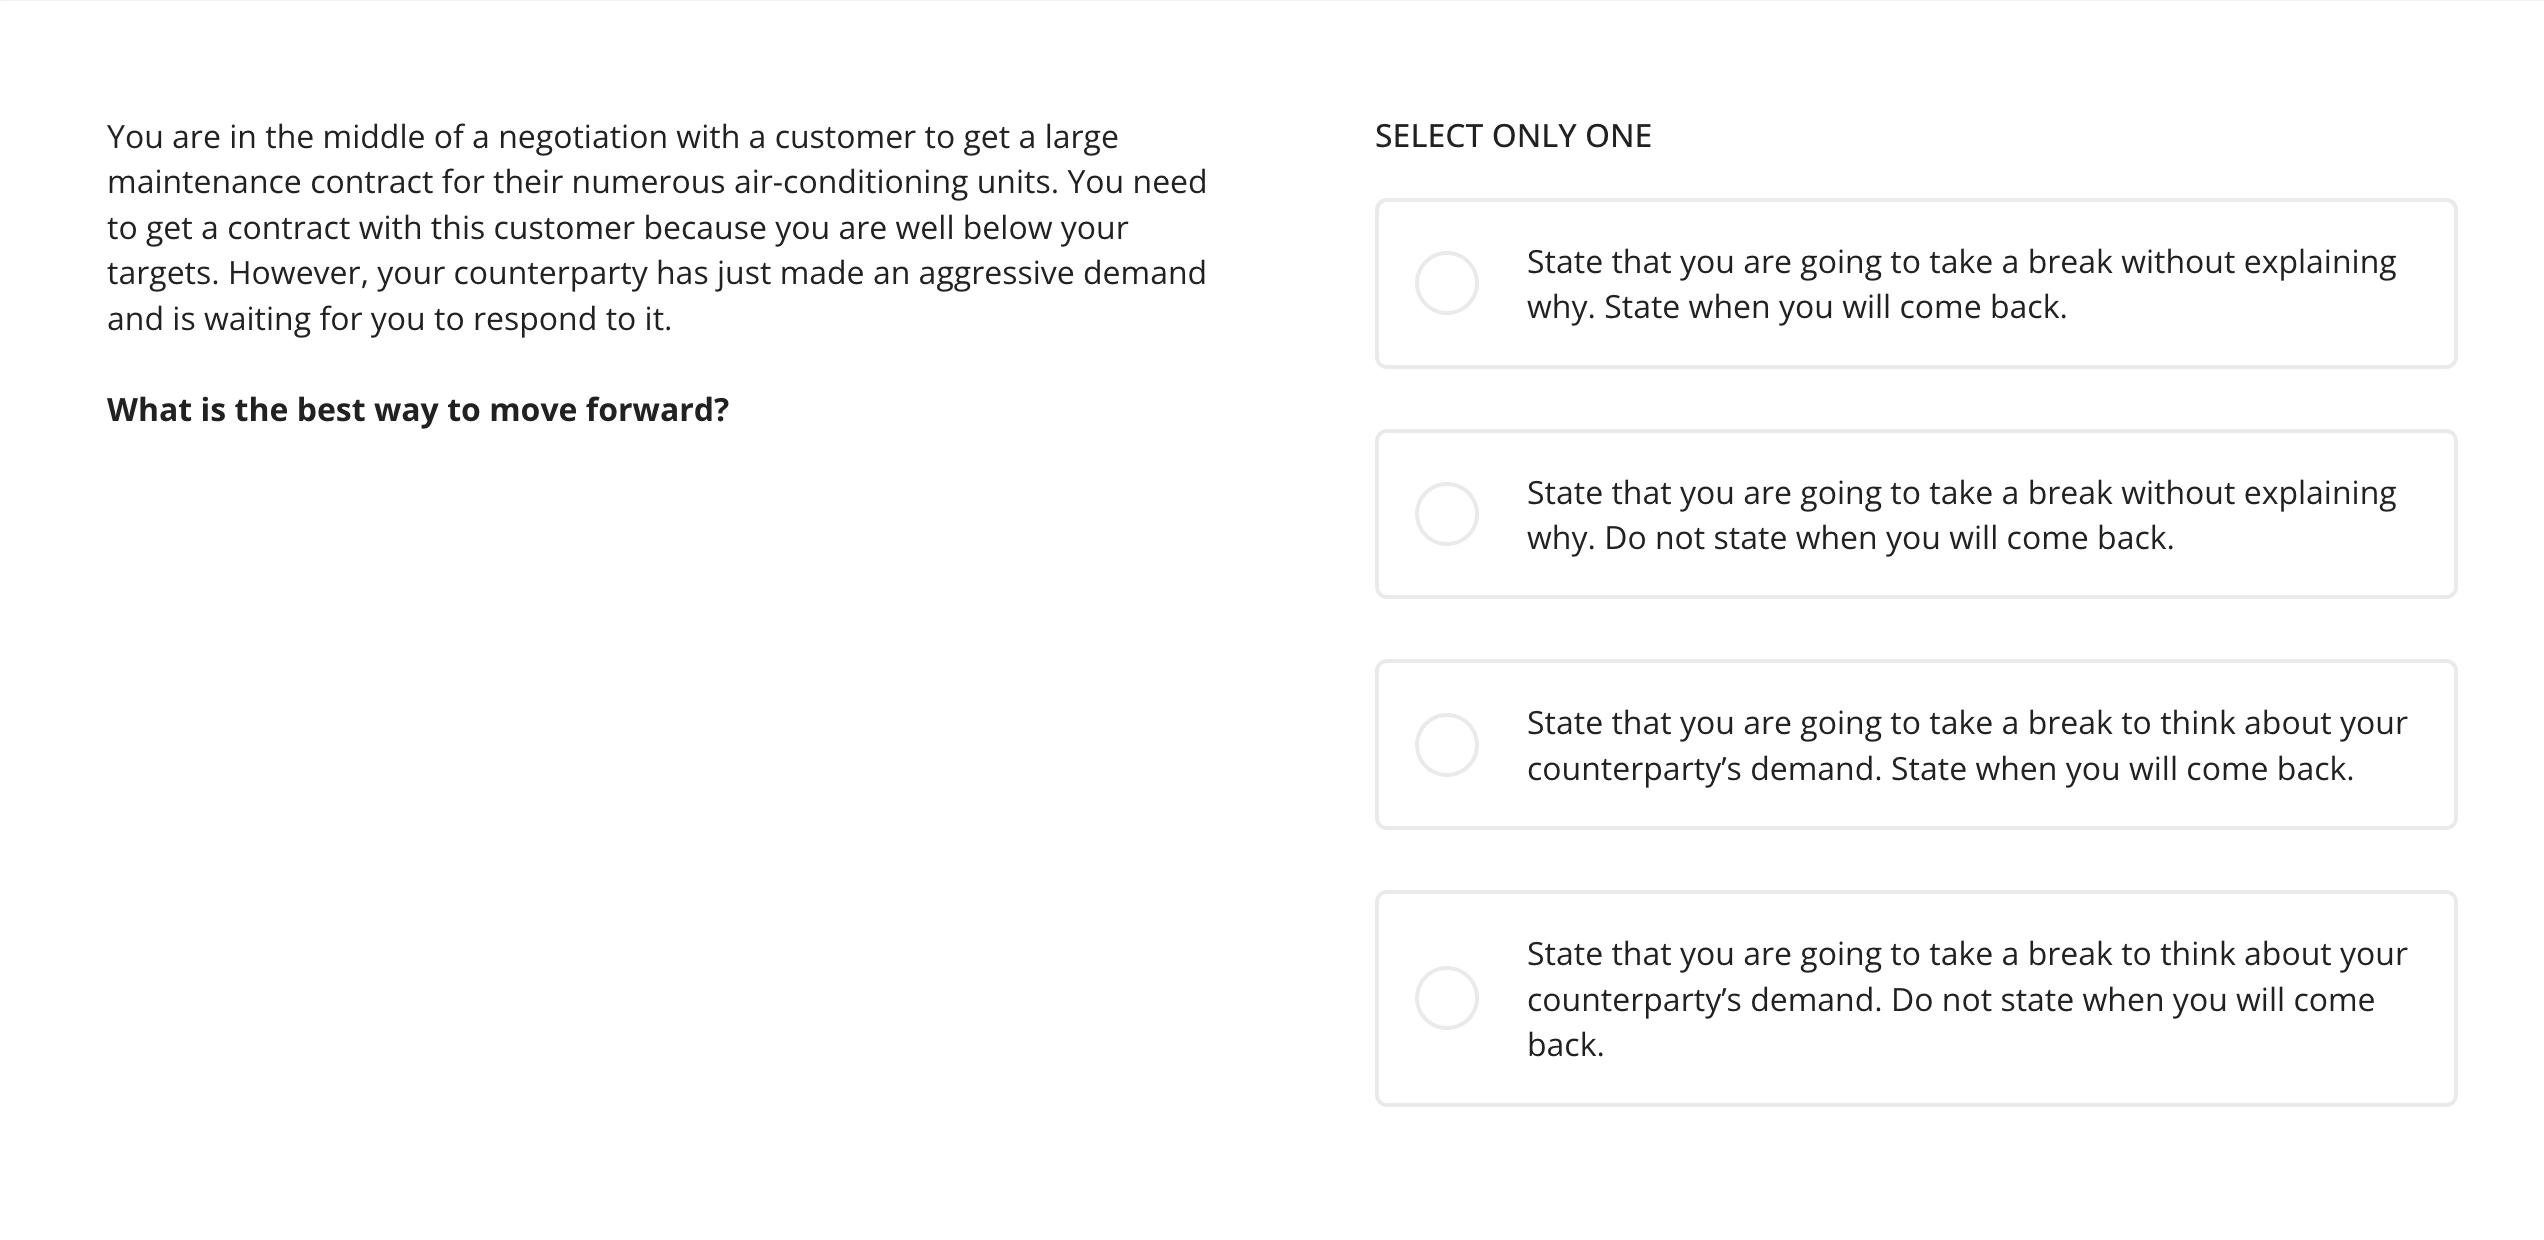 example of a negotiation skills test question in TestGorilla